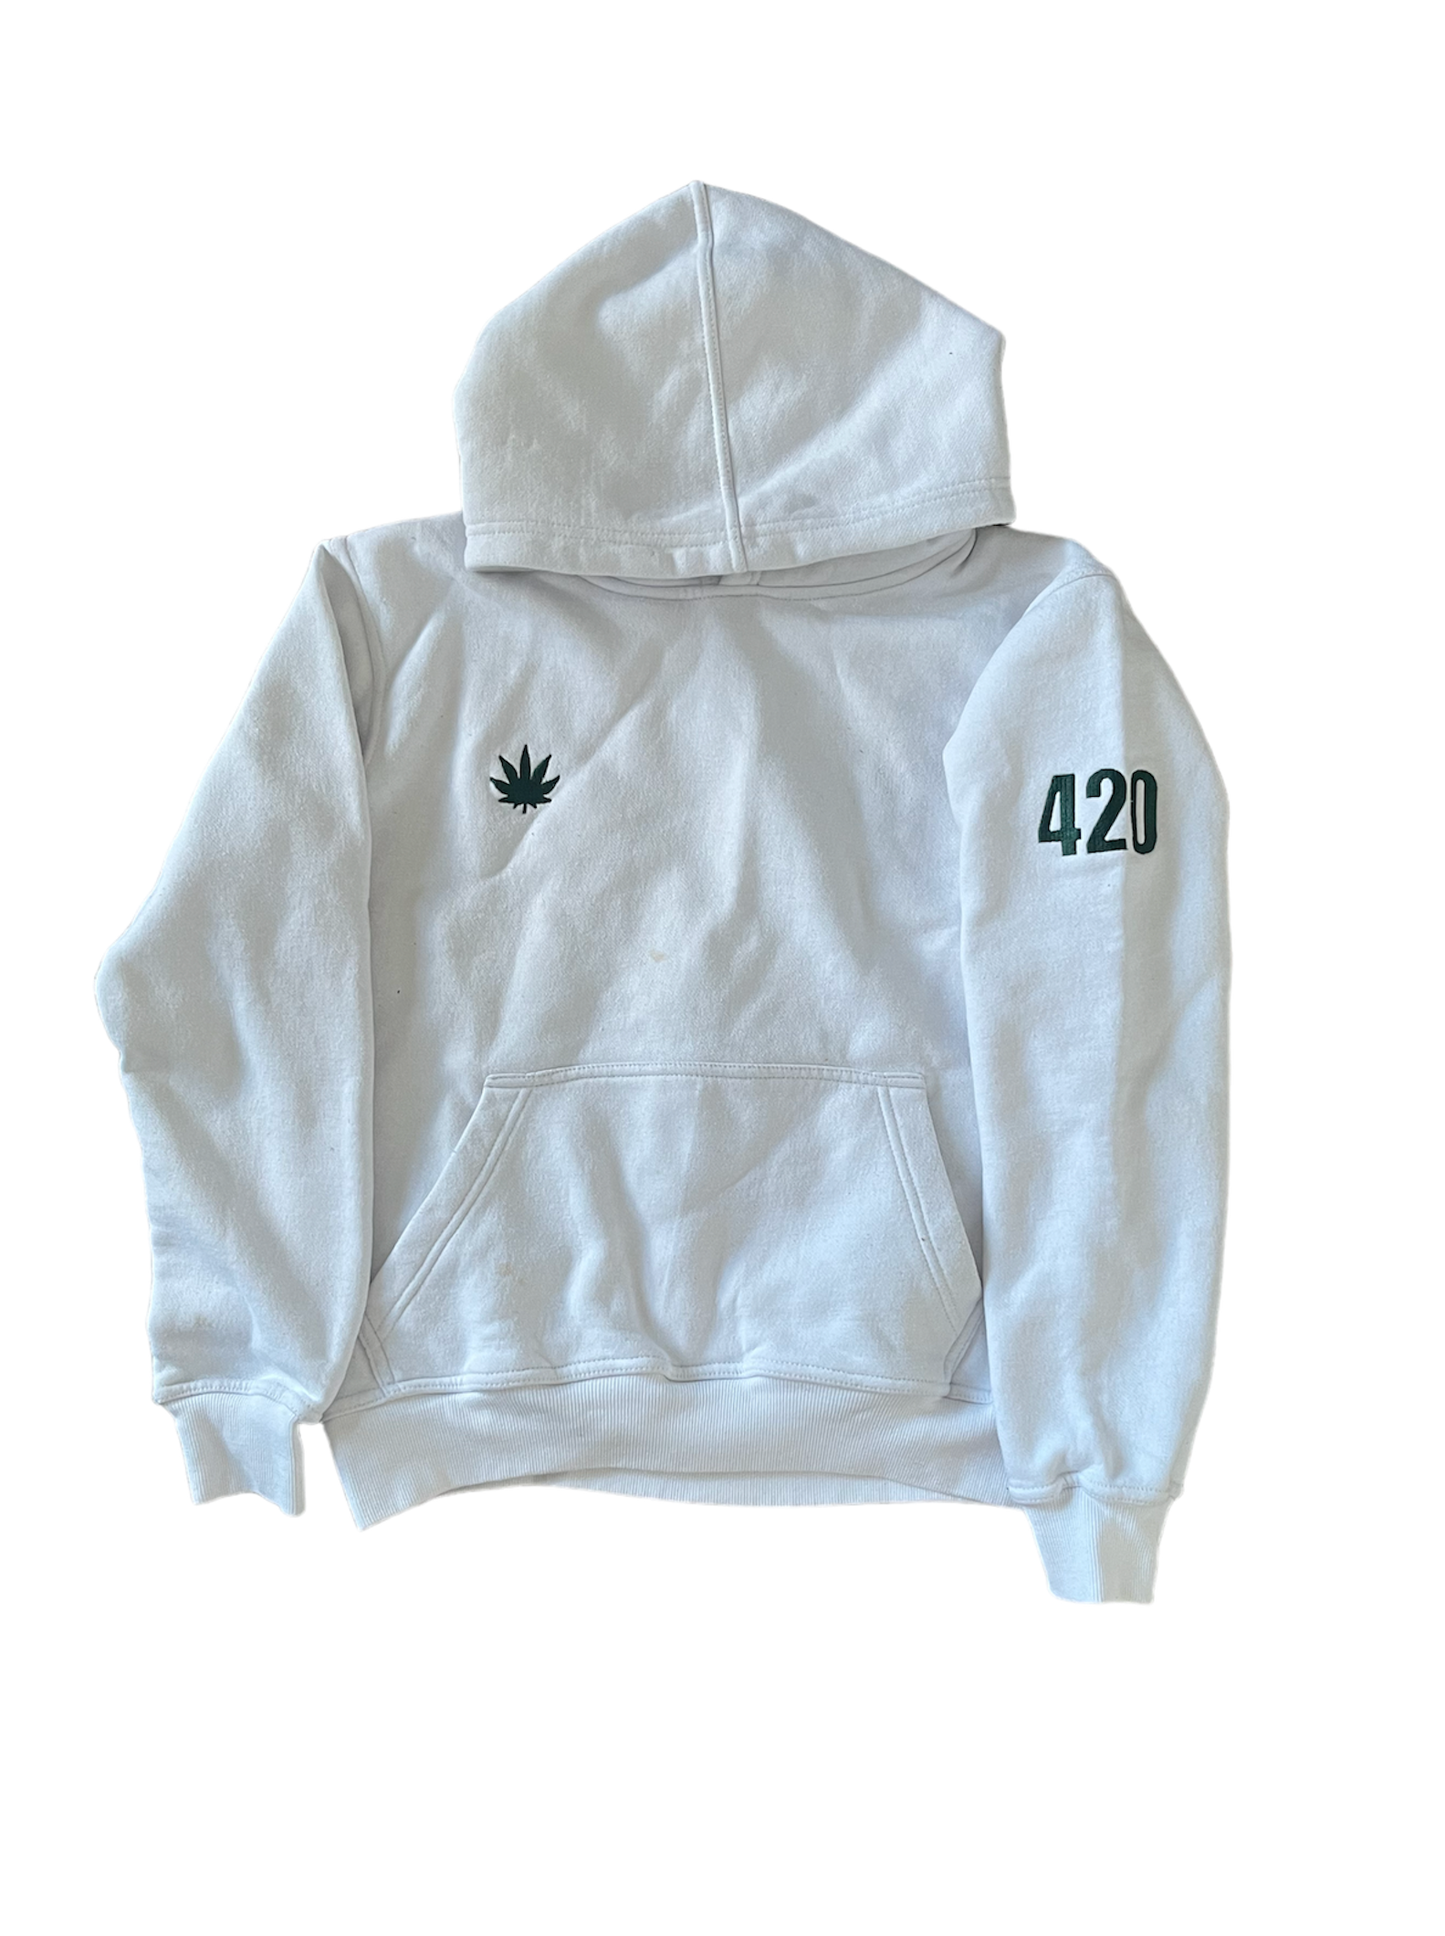 Premium | 420 Designer hoodie| 100% cotton | embroidered